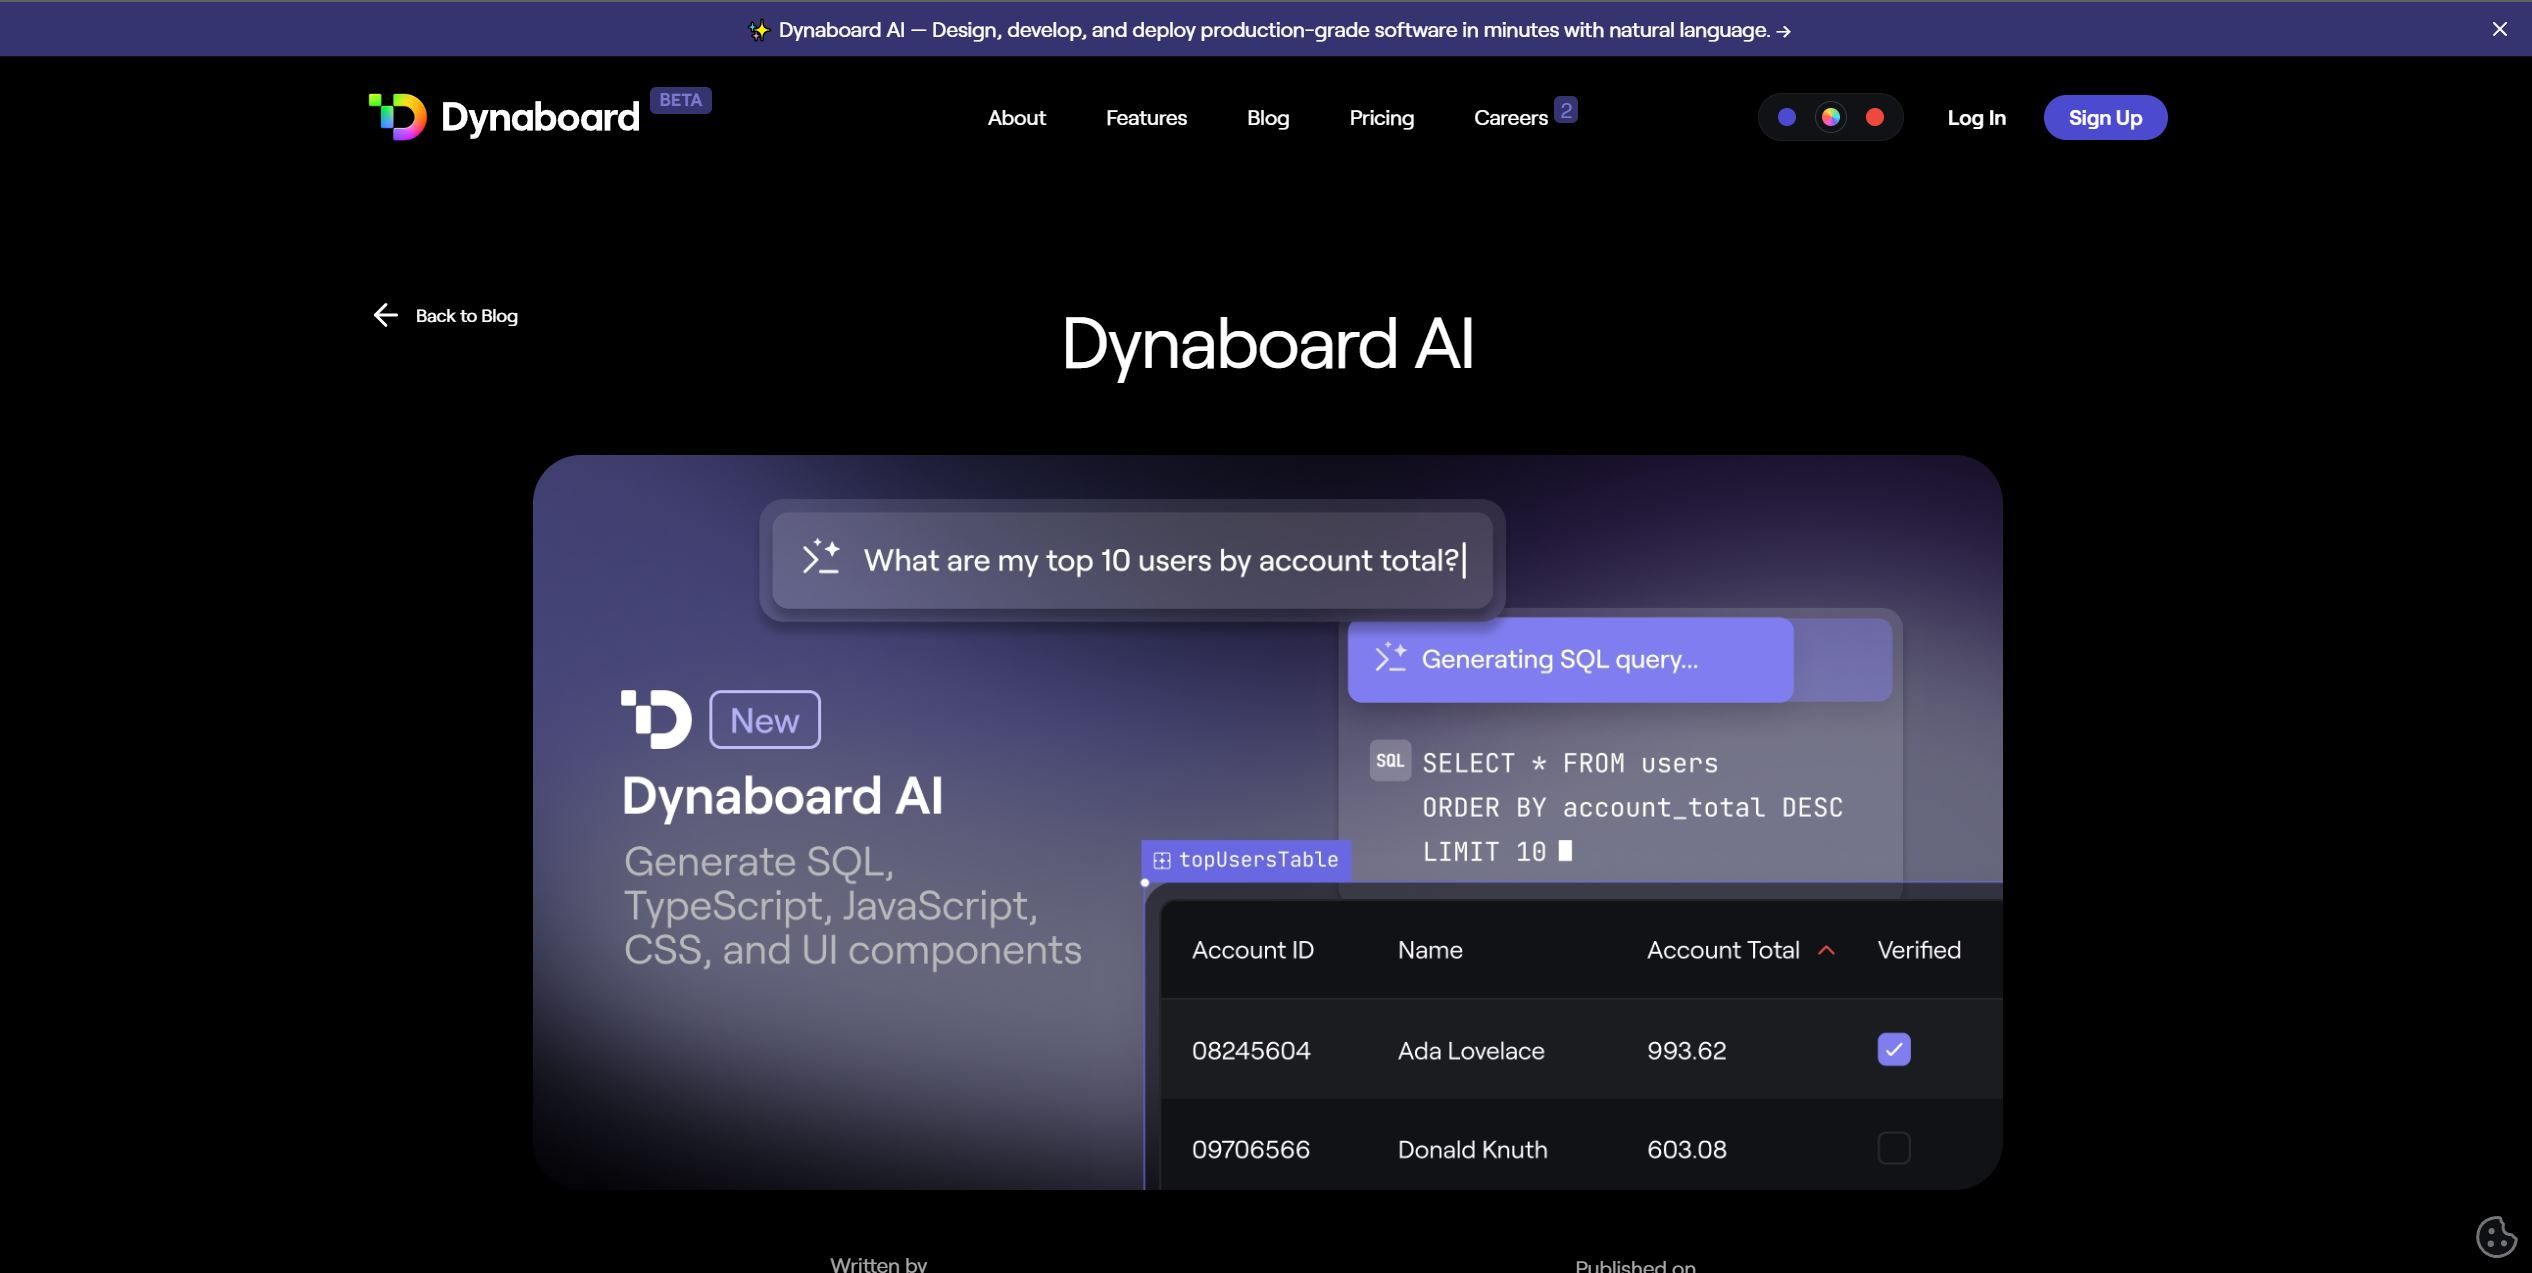 Dynaboard AI